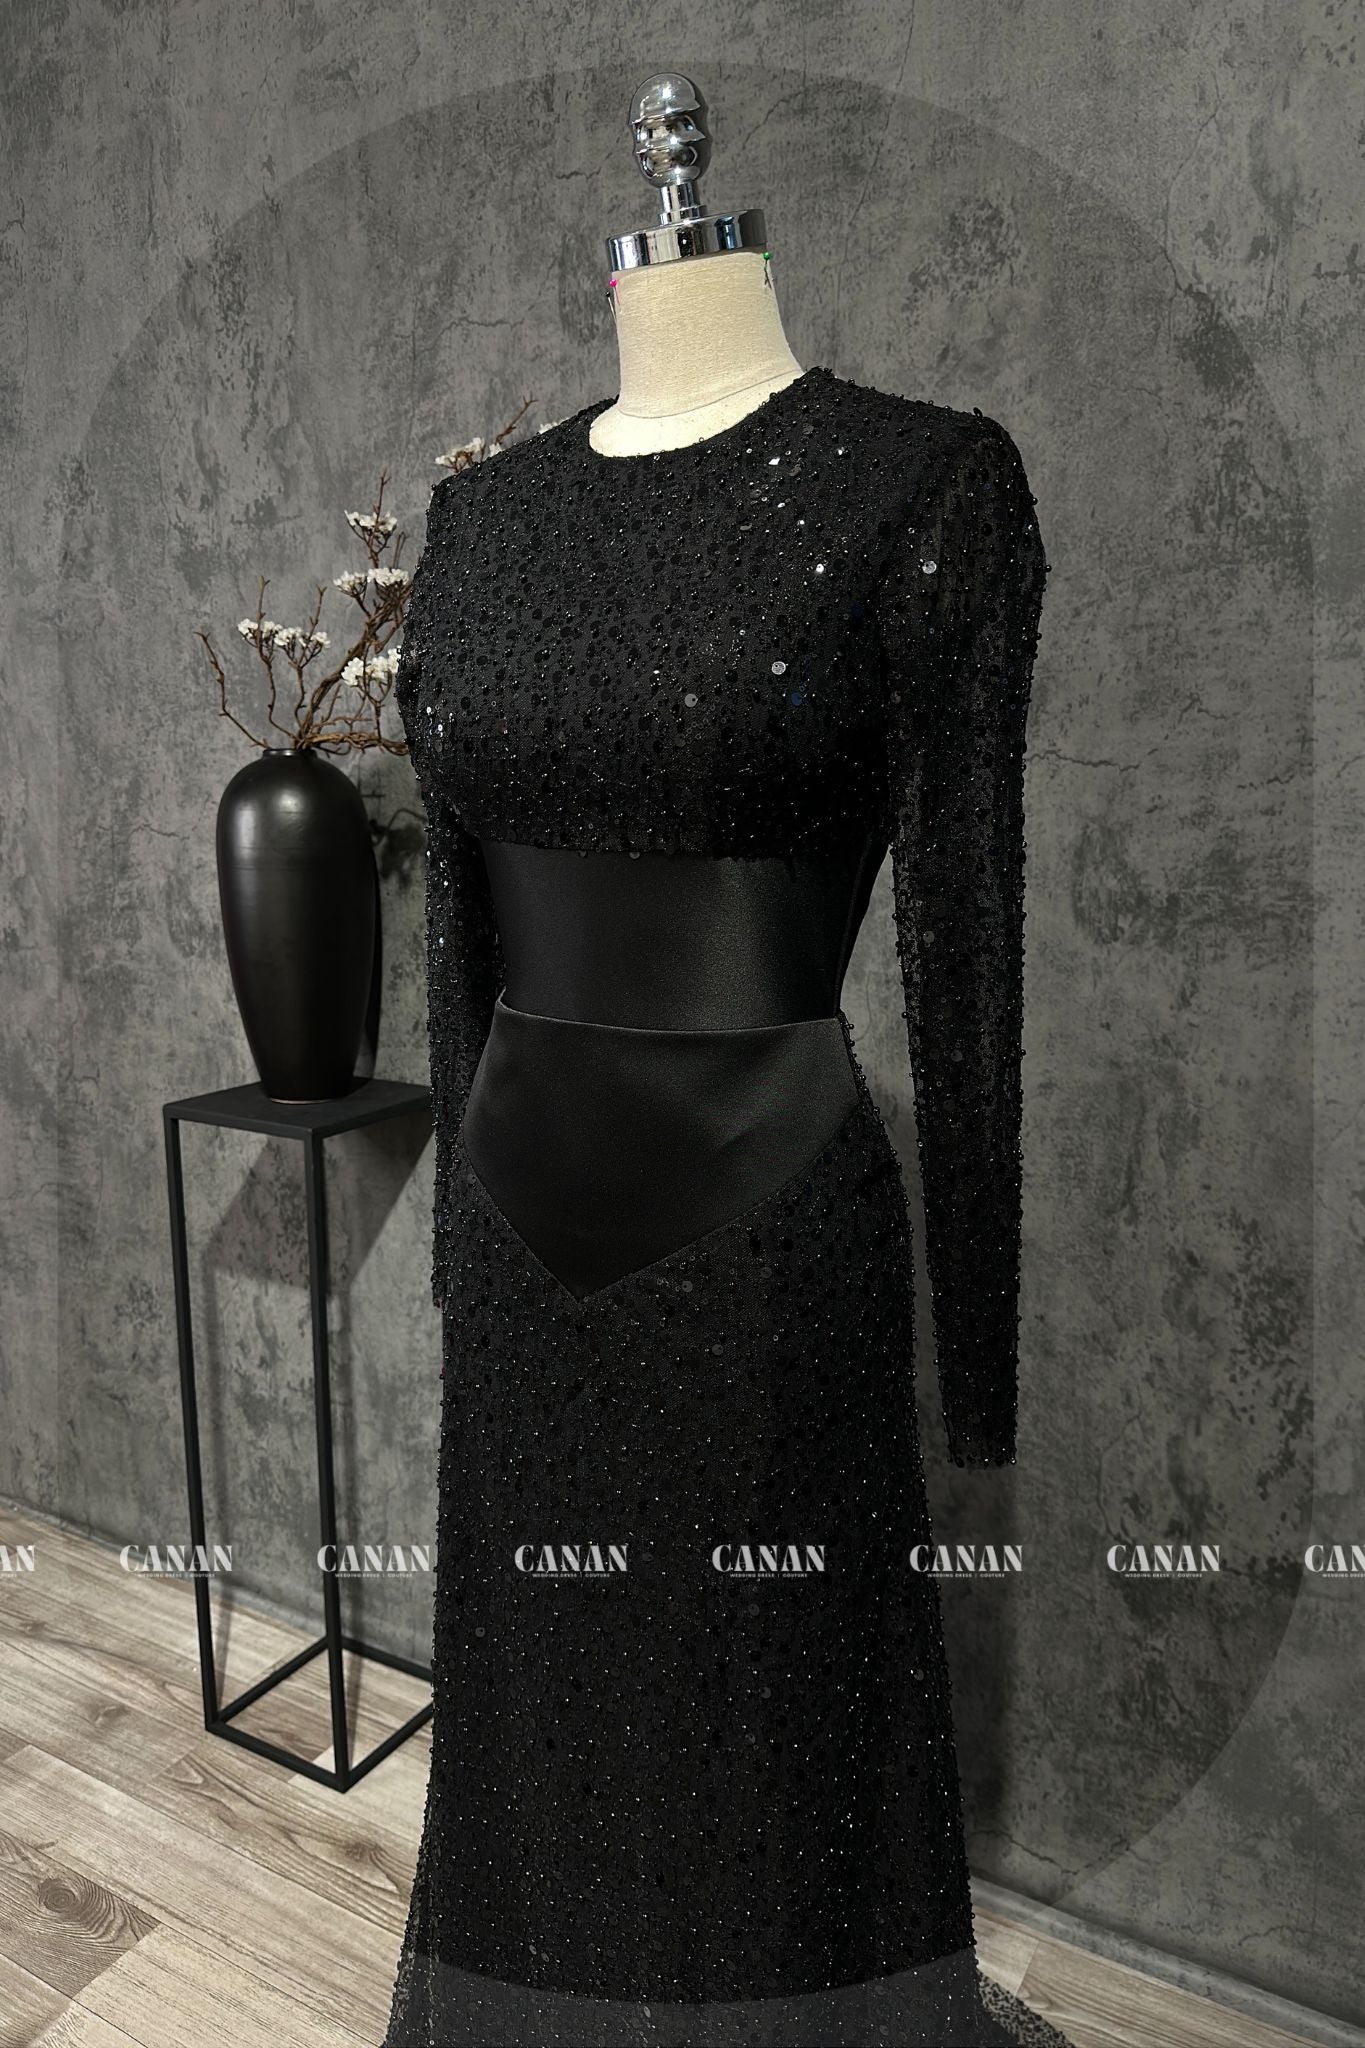 Daisy - Elegant and Classy Black Sheath Dress with Sparkling Long Sleeves